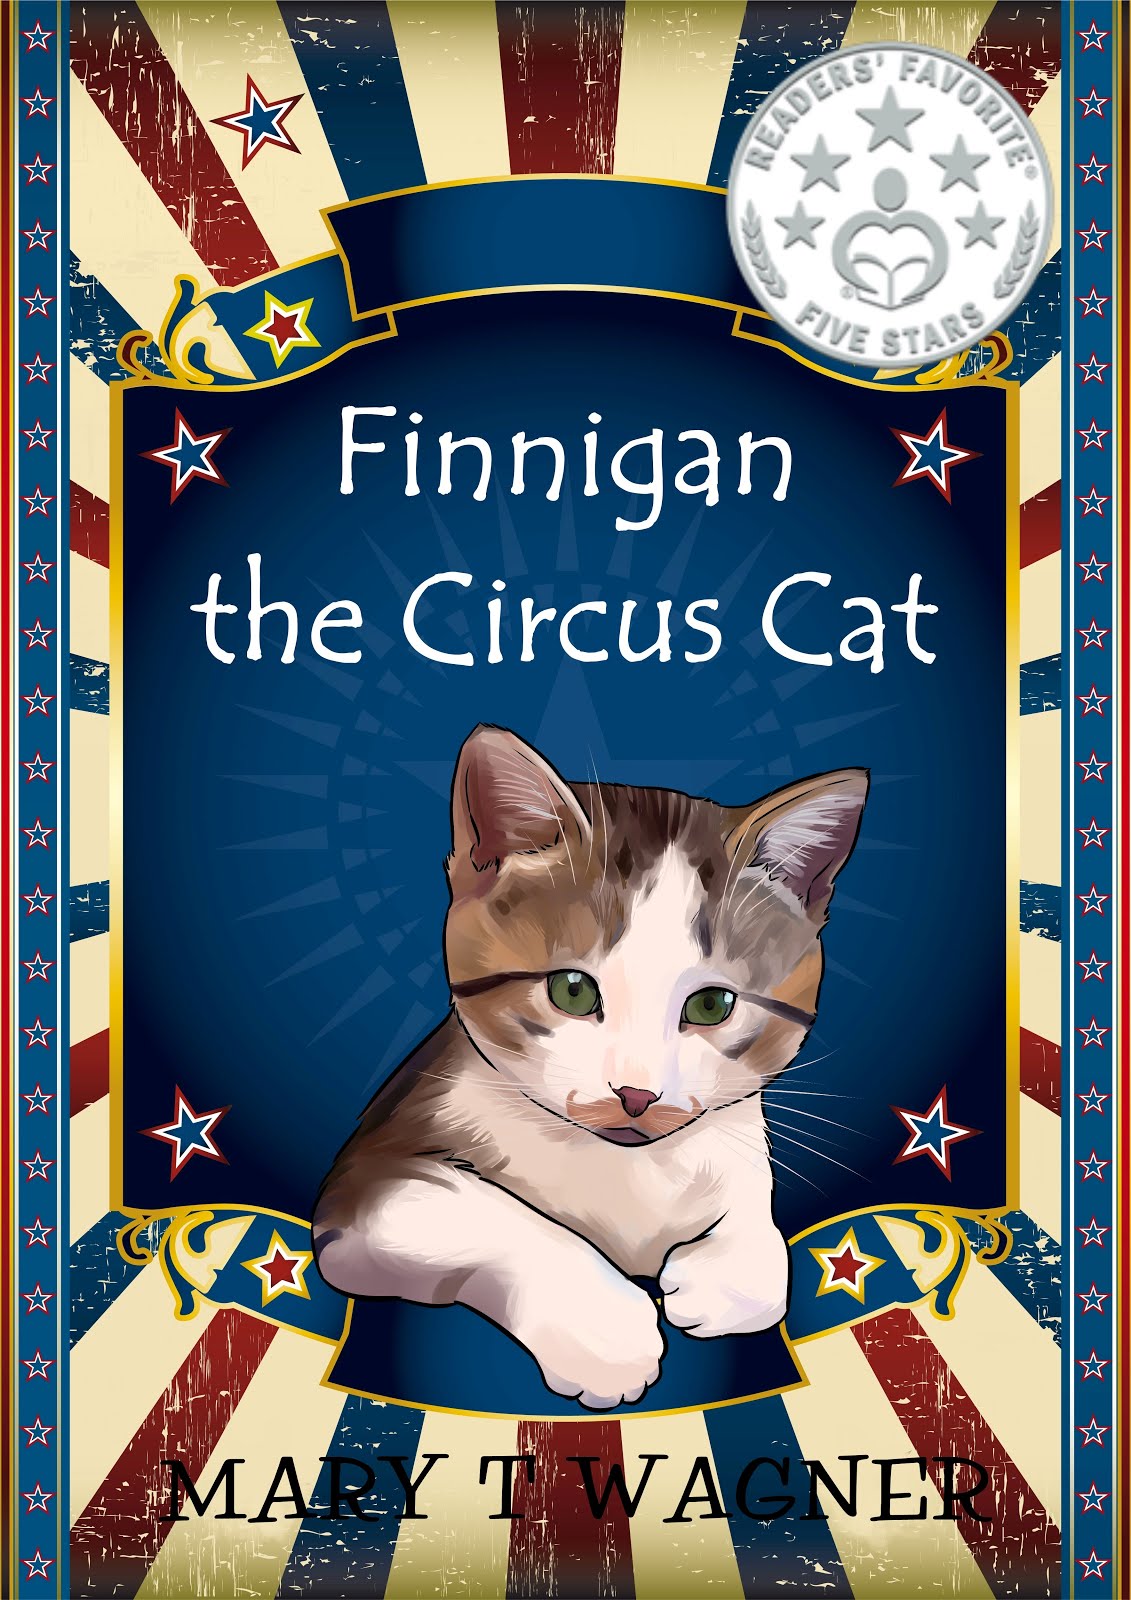 The Finnigan series begins!